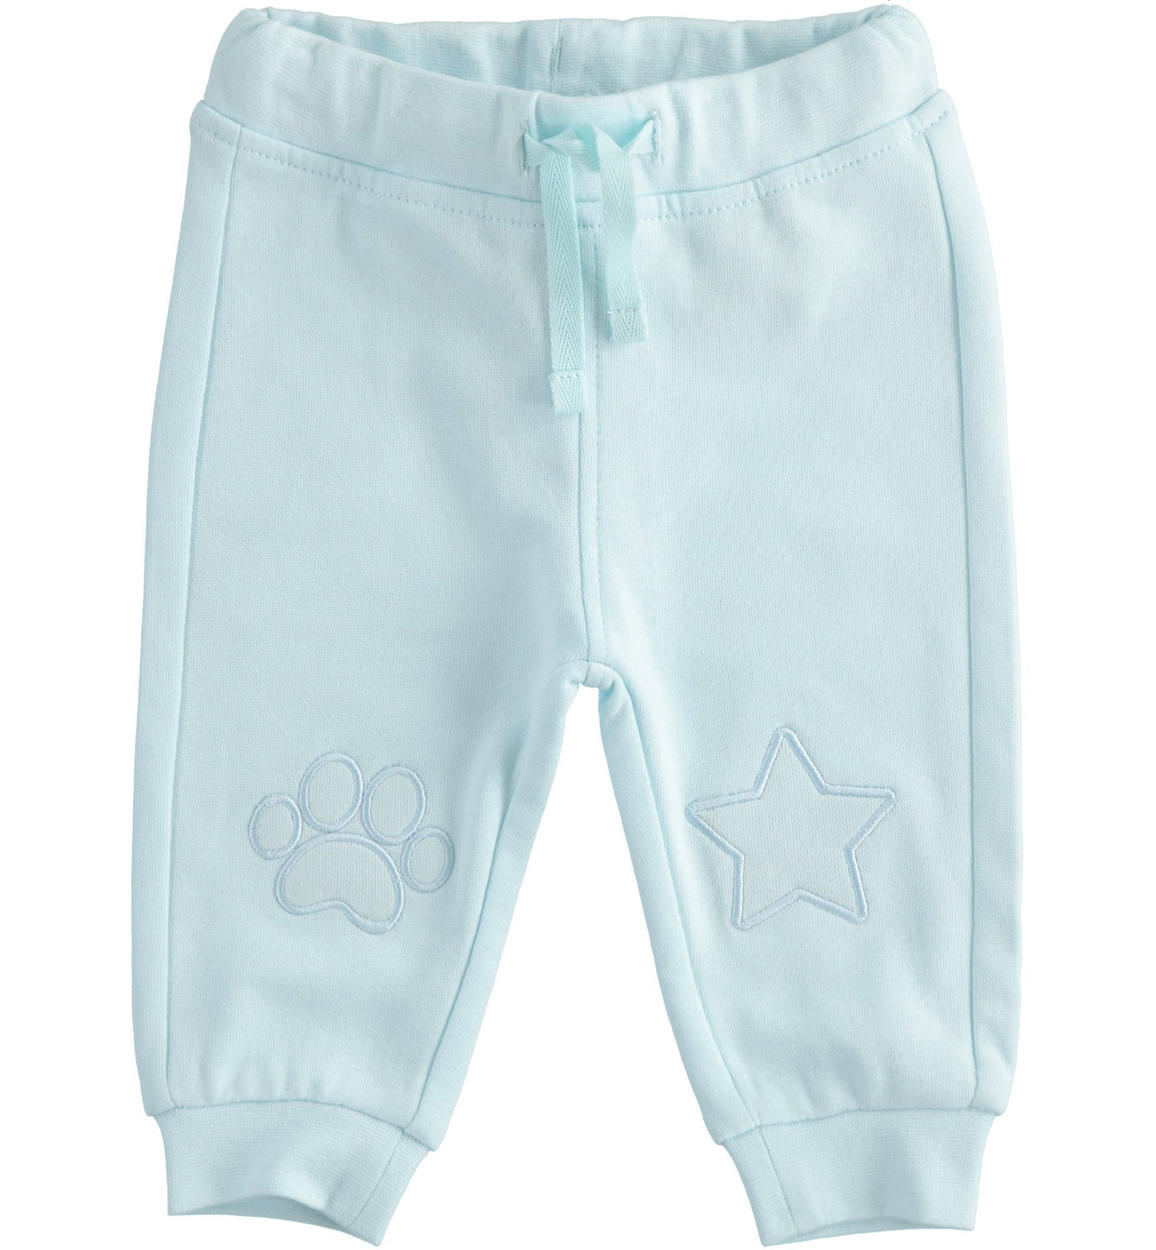 Pantalone in felpa invernale con toppe per bambino da 0 a 18 mesi iDO -  PANTALONI - Bambino - iDO